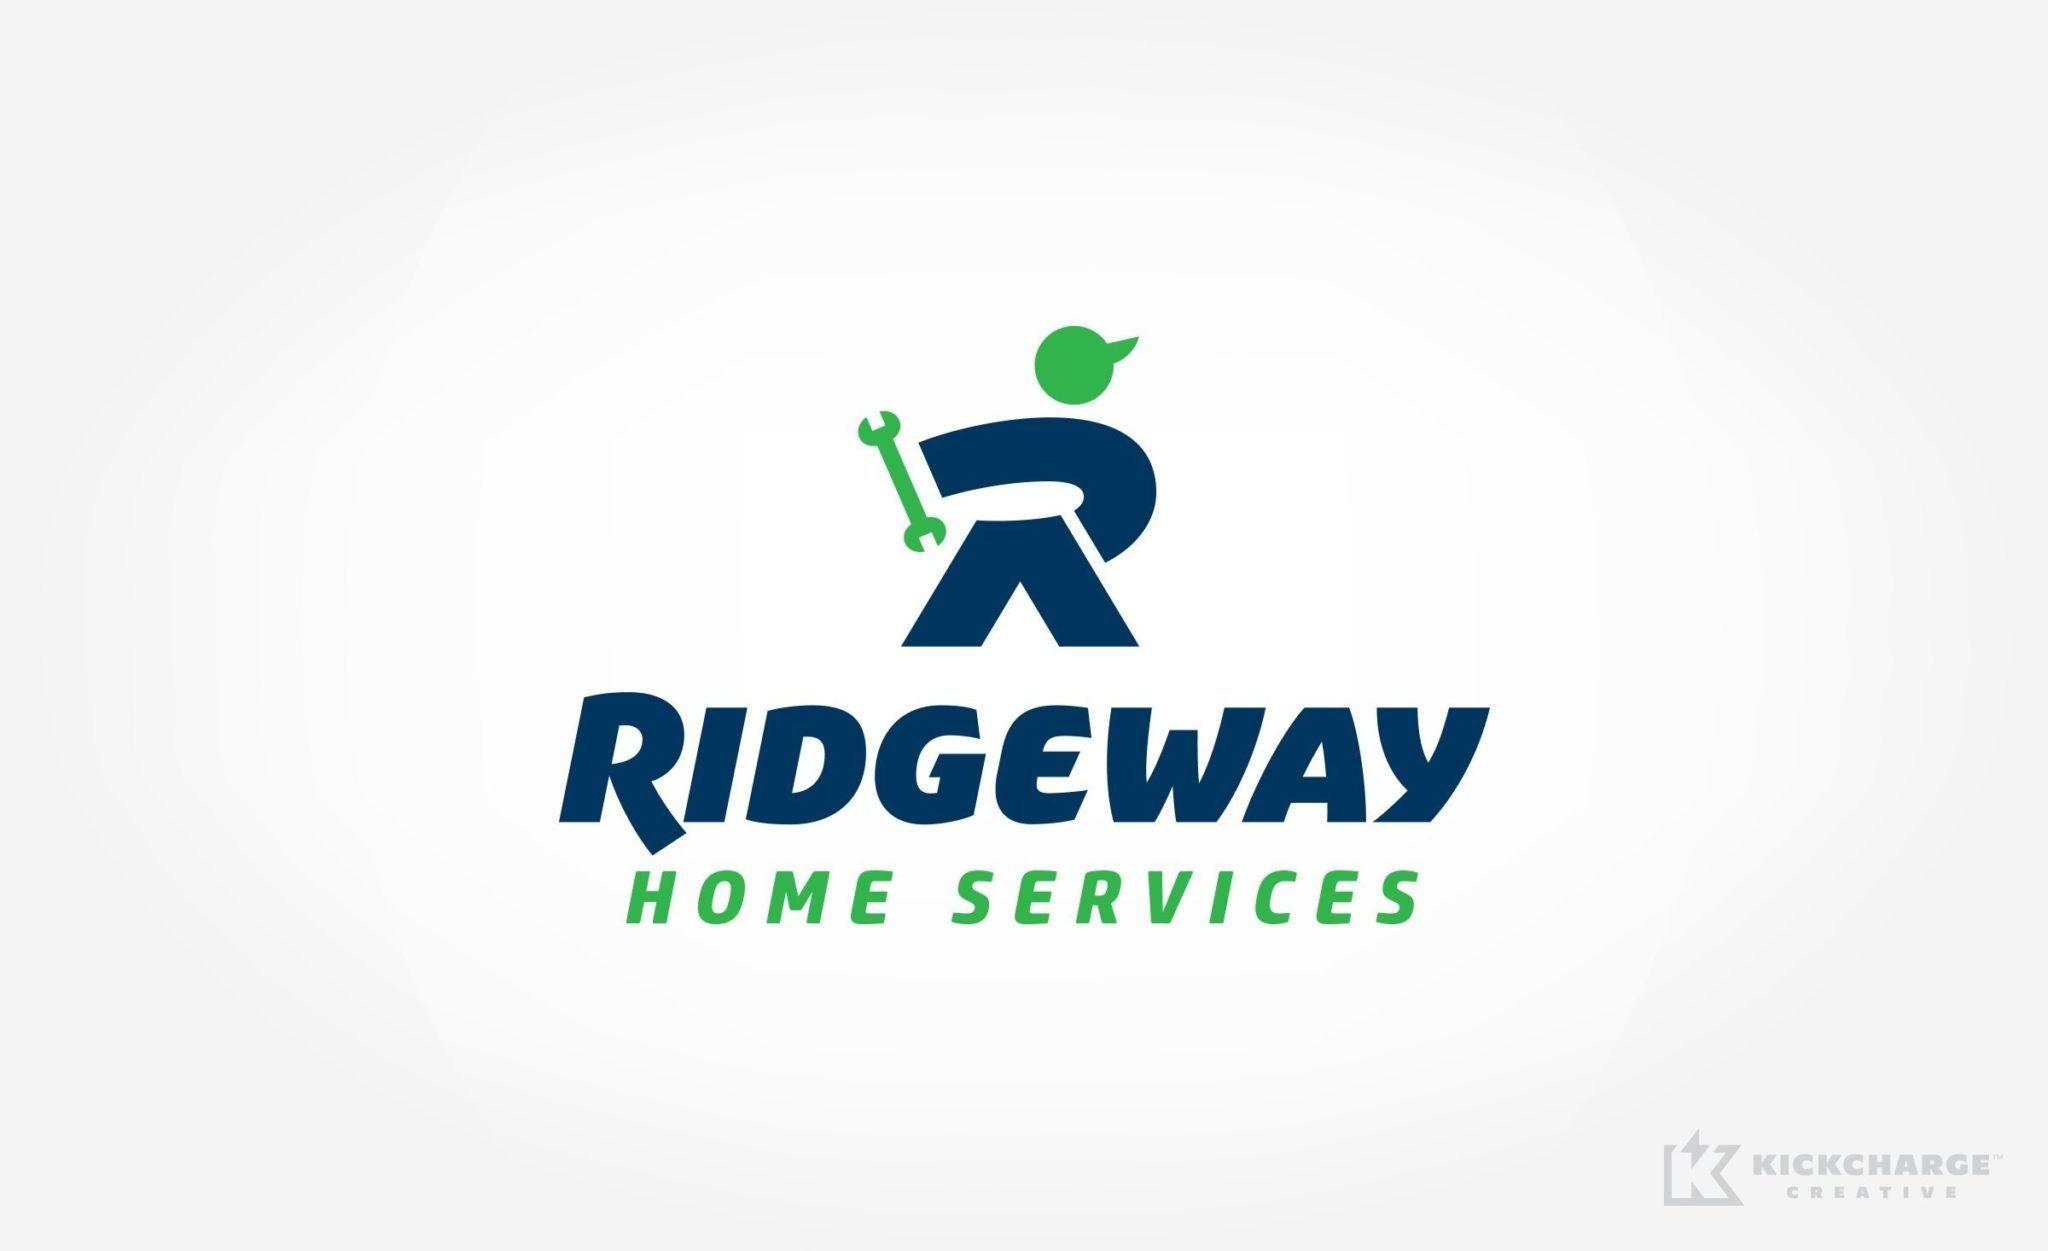 Home Service Logo - Ridgeway Home Services - KickCharge Creative | kickcharge.com ...